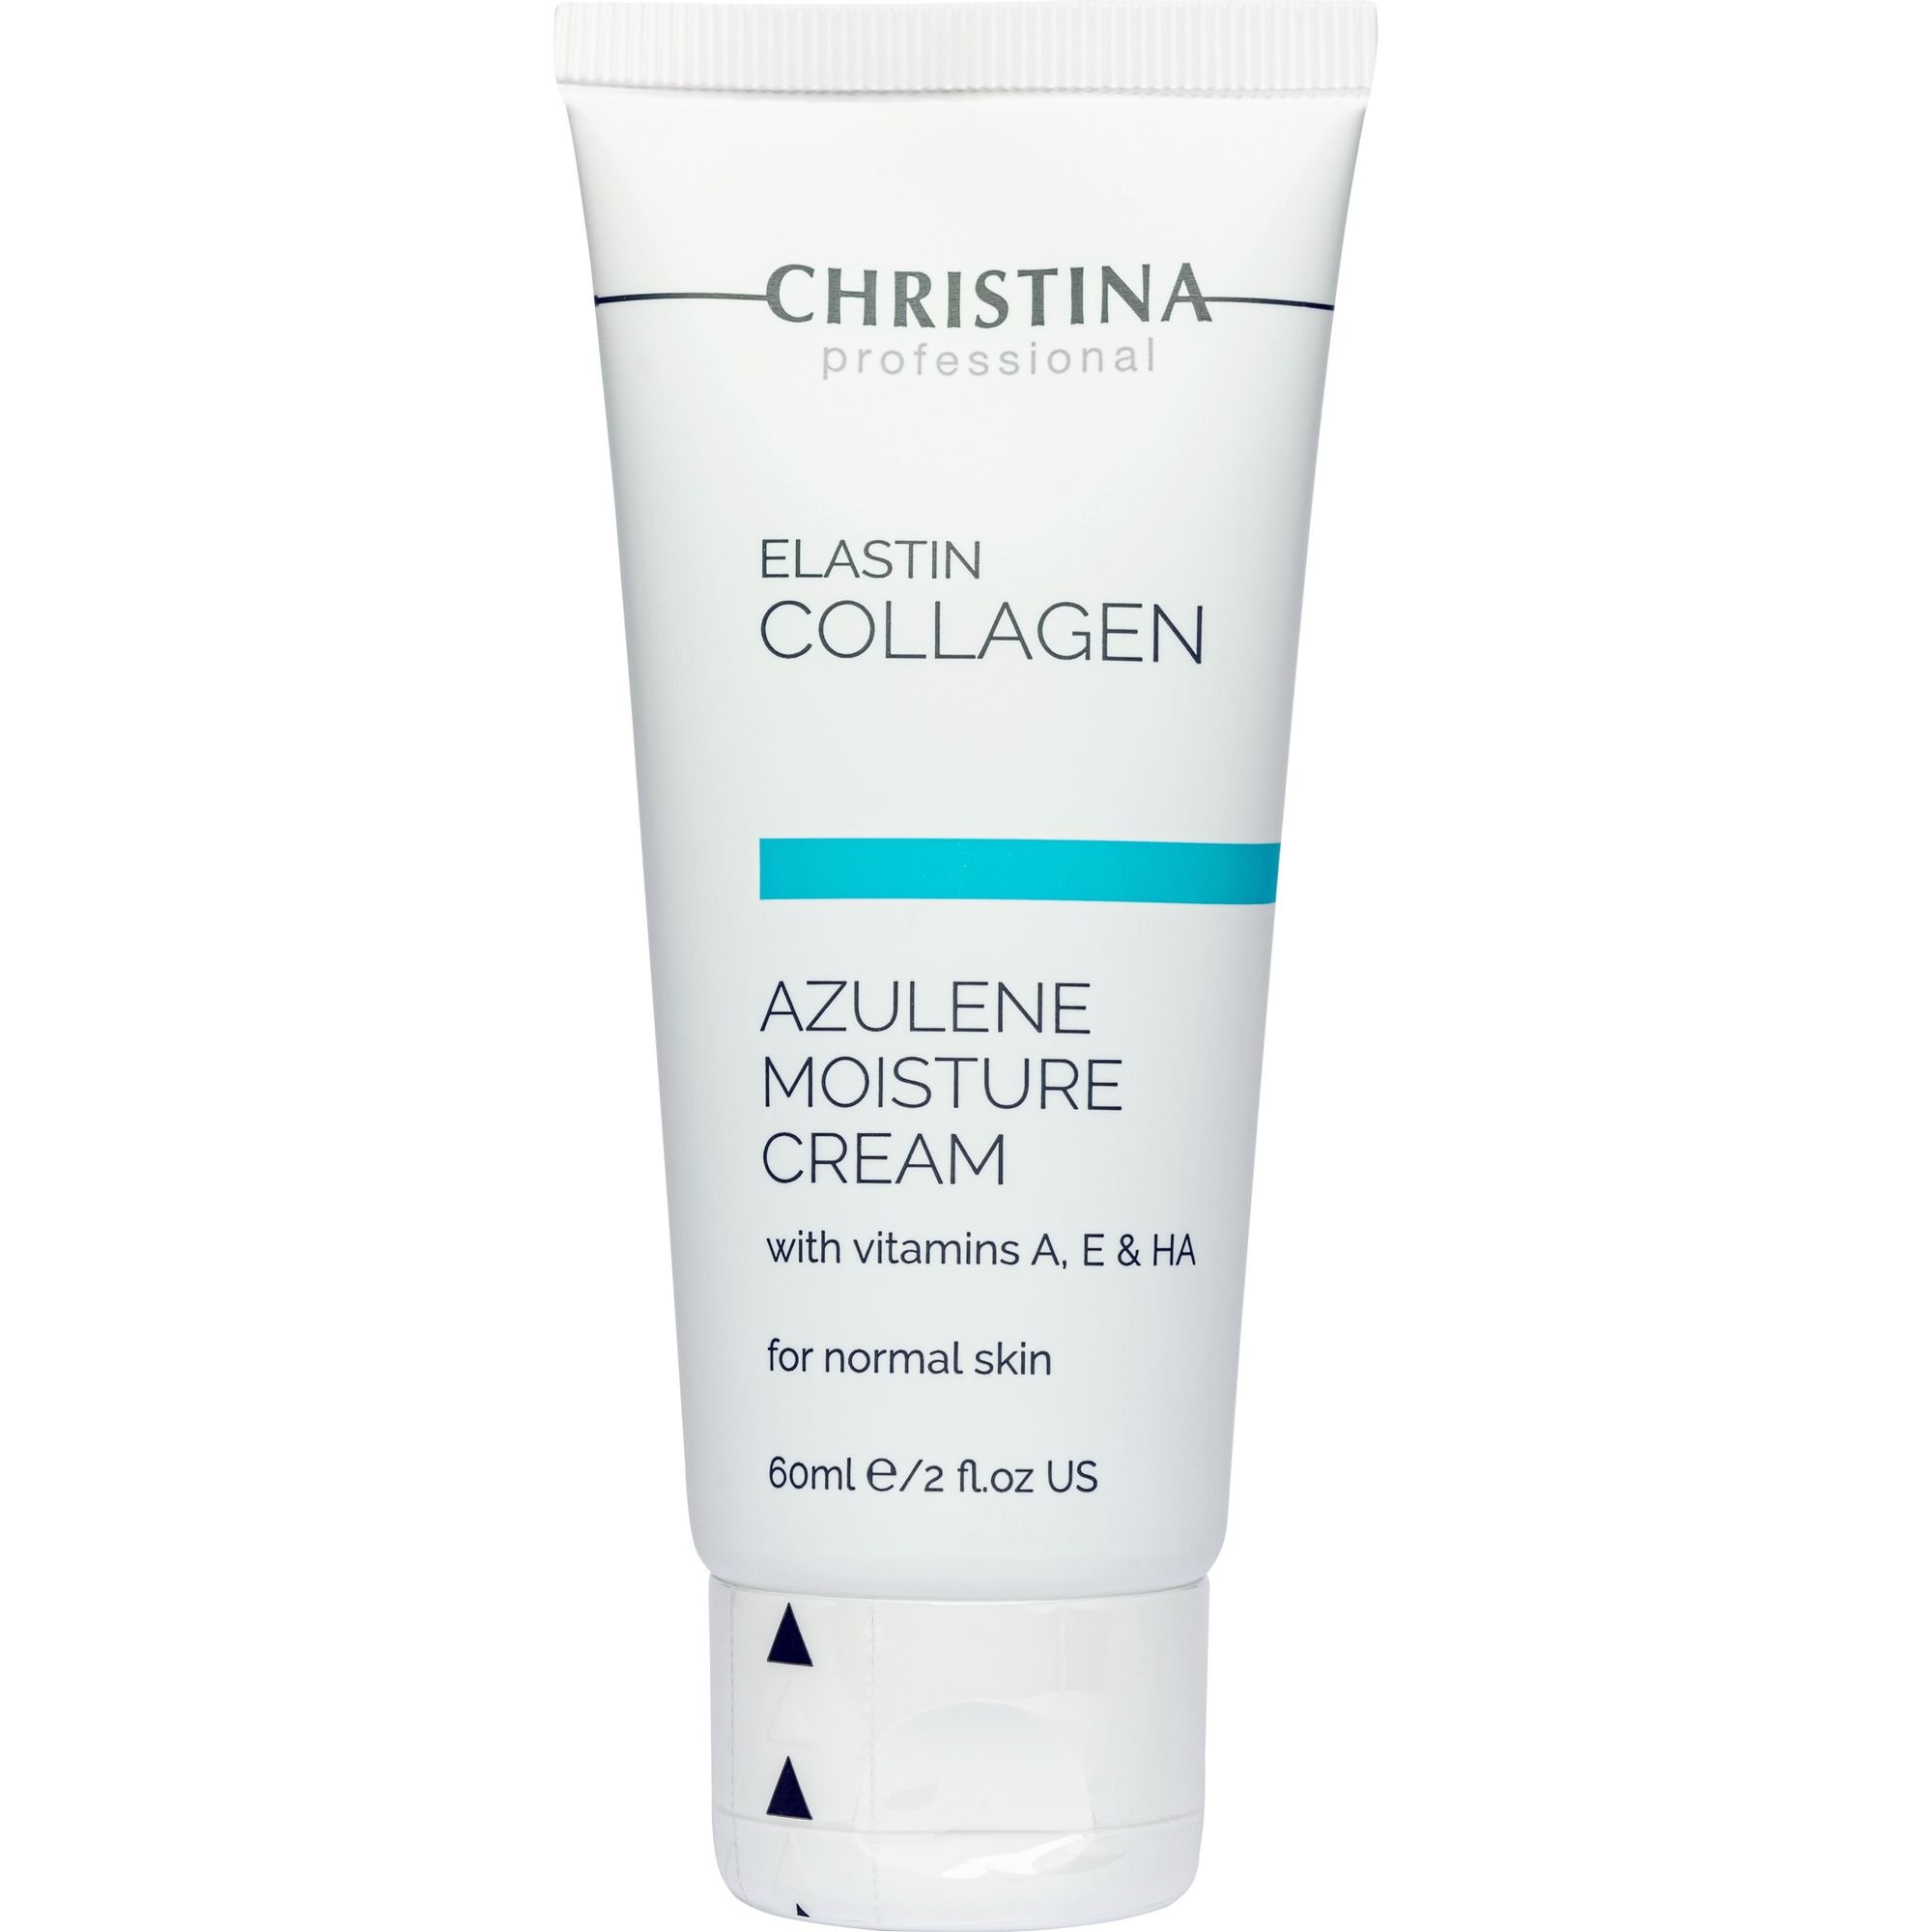 Увлажняющий крем для нормальной кожи Christina Elastin Collagen Azulene Moisture Cream with Vitamins A, E & HA 60 мл - фото 1